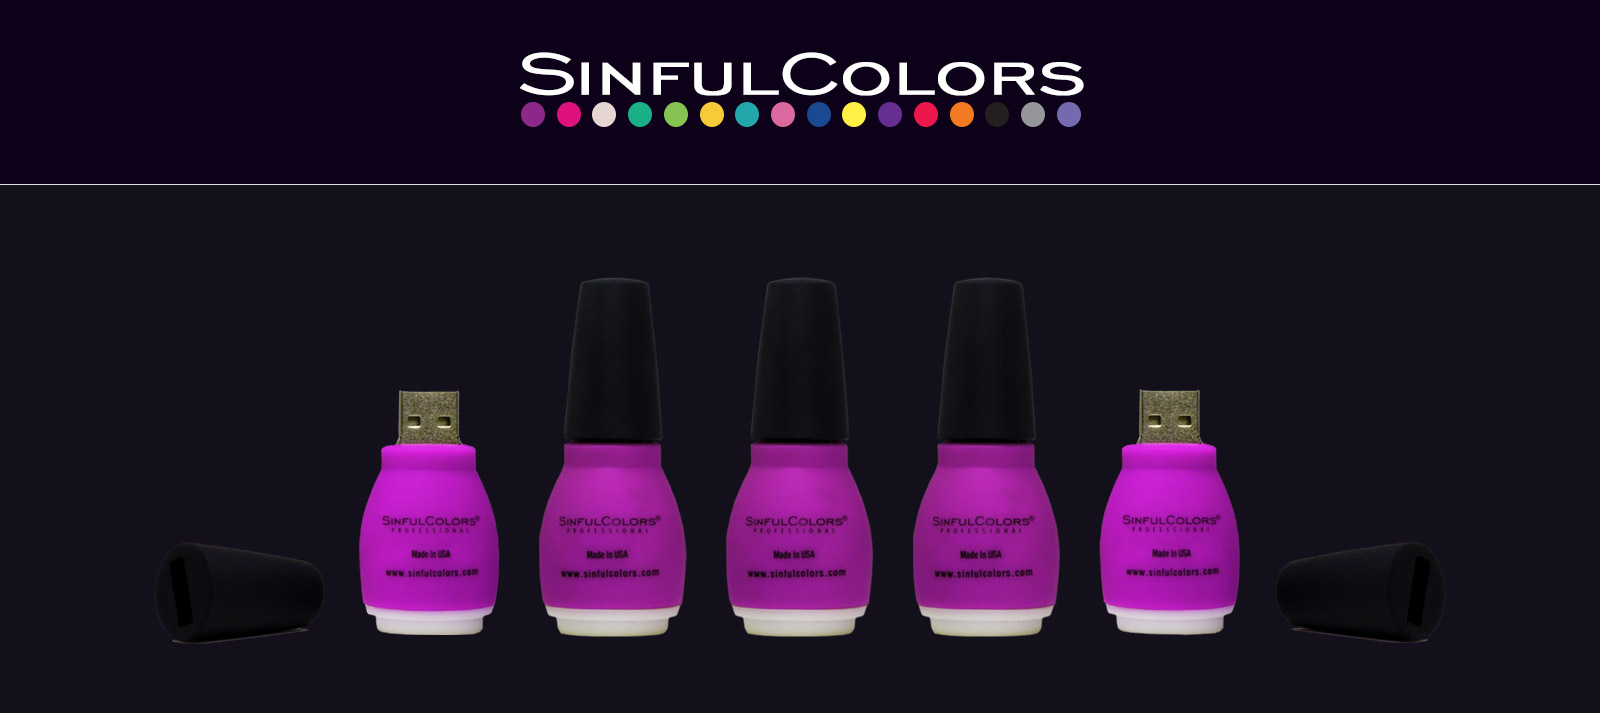 Sinful Colors Custom Flash Drives 03